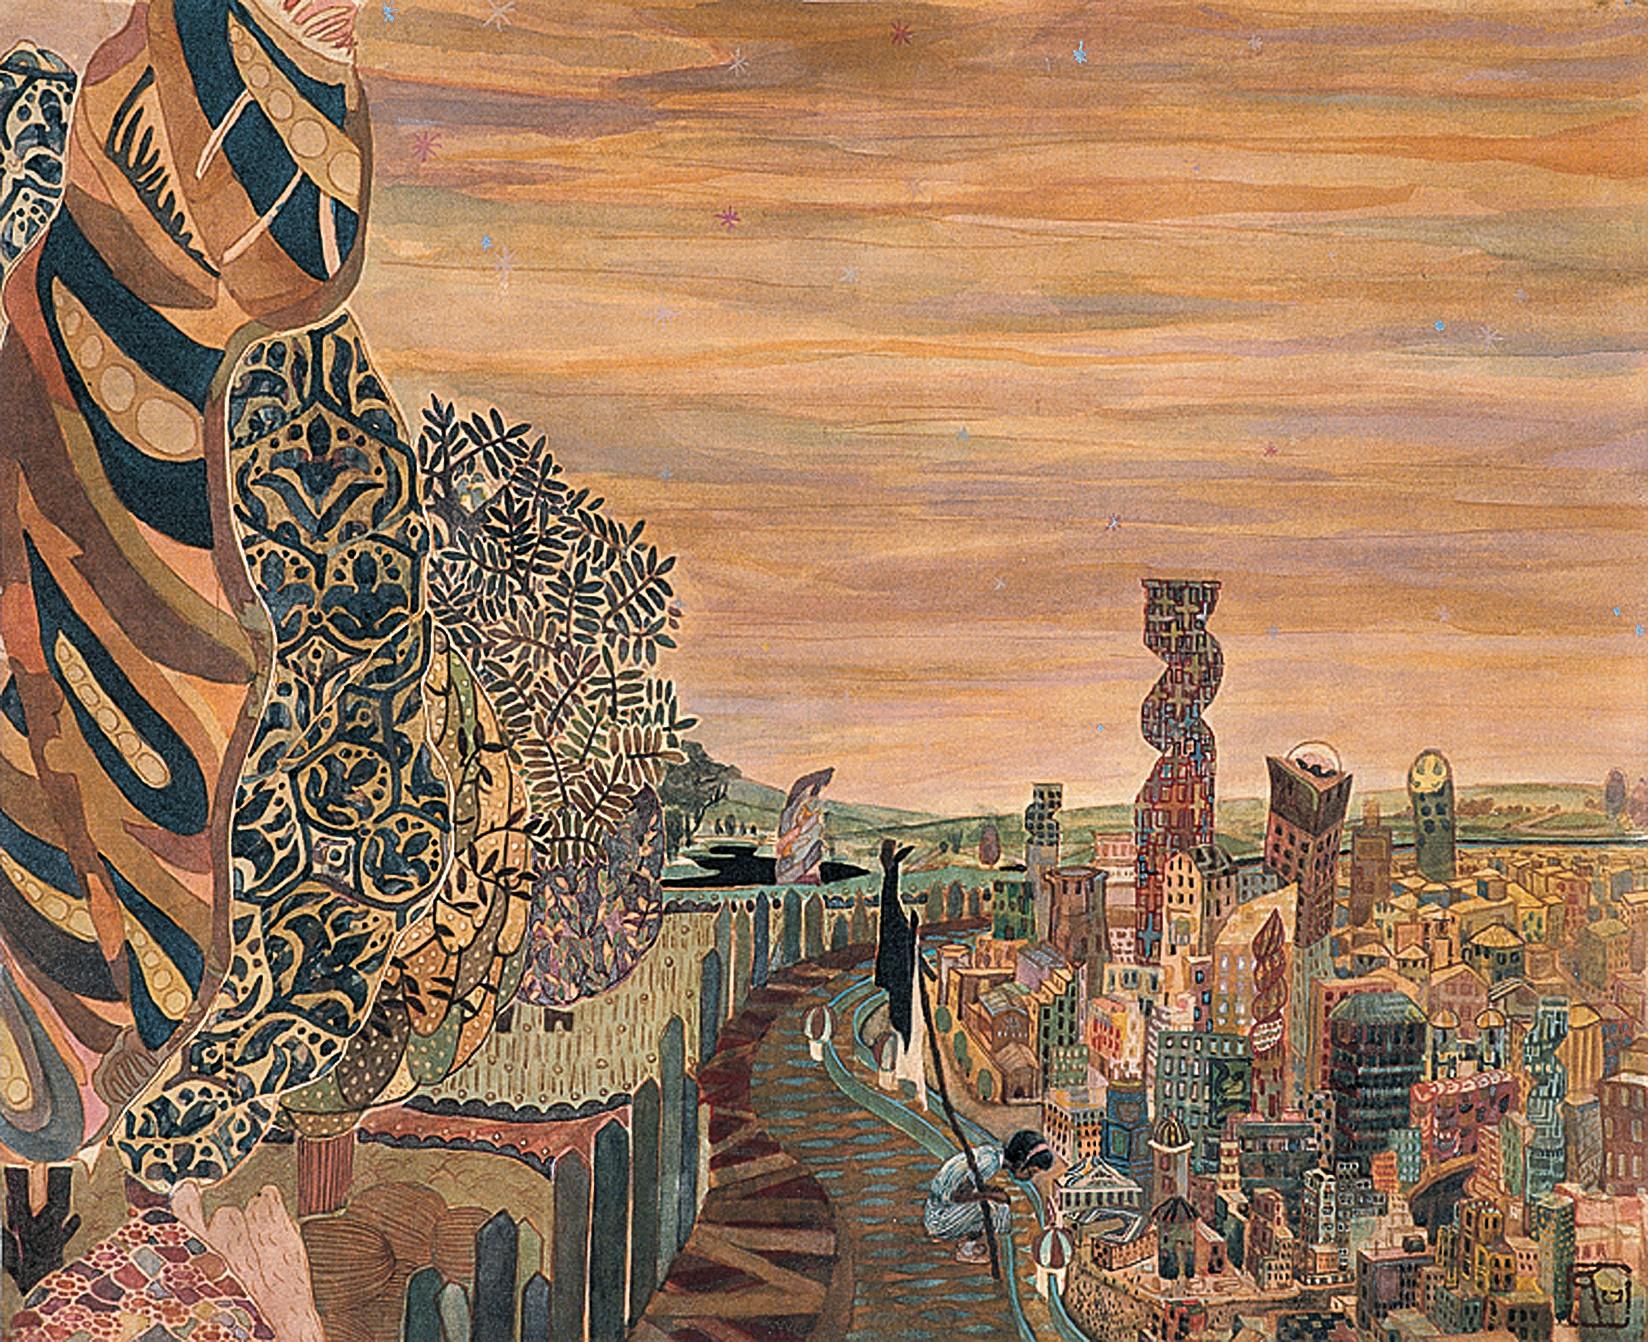 Maki Kuchida Landscape Painting – "Die Stadt" Landschaft figurative Seidenmalerei Abenteuer Reise des Lebens Mut